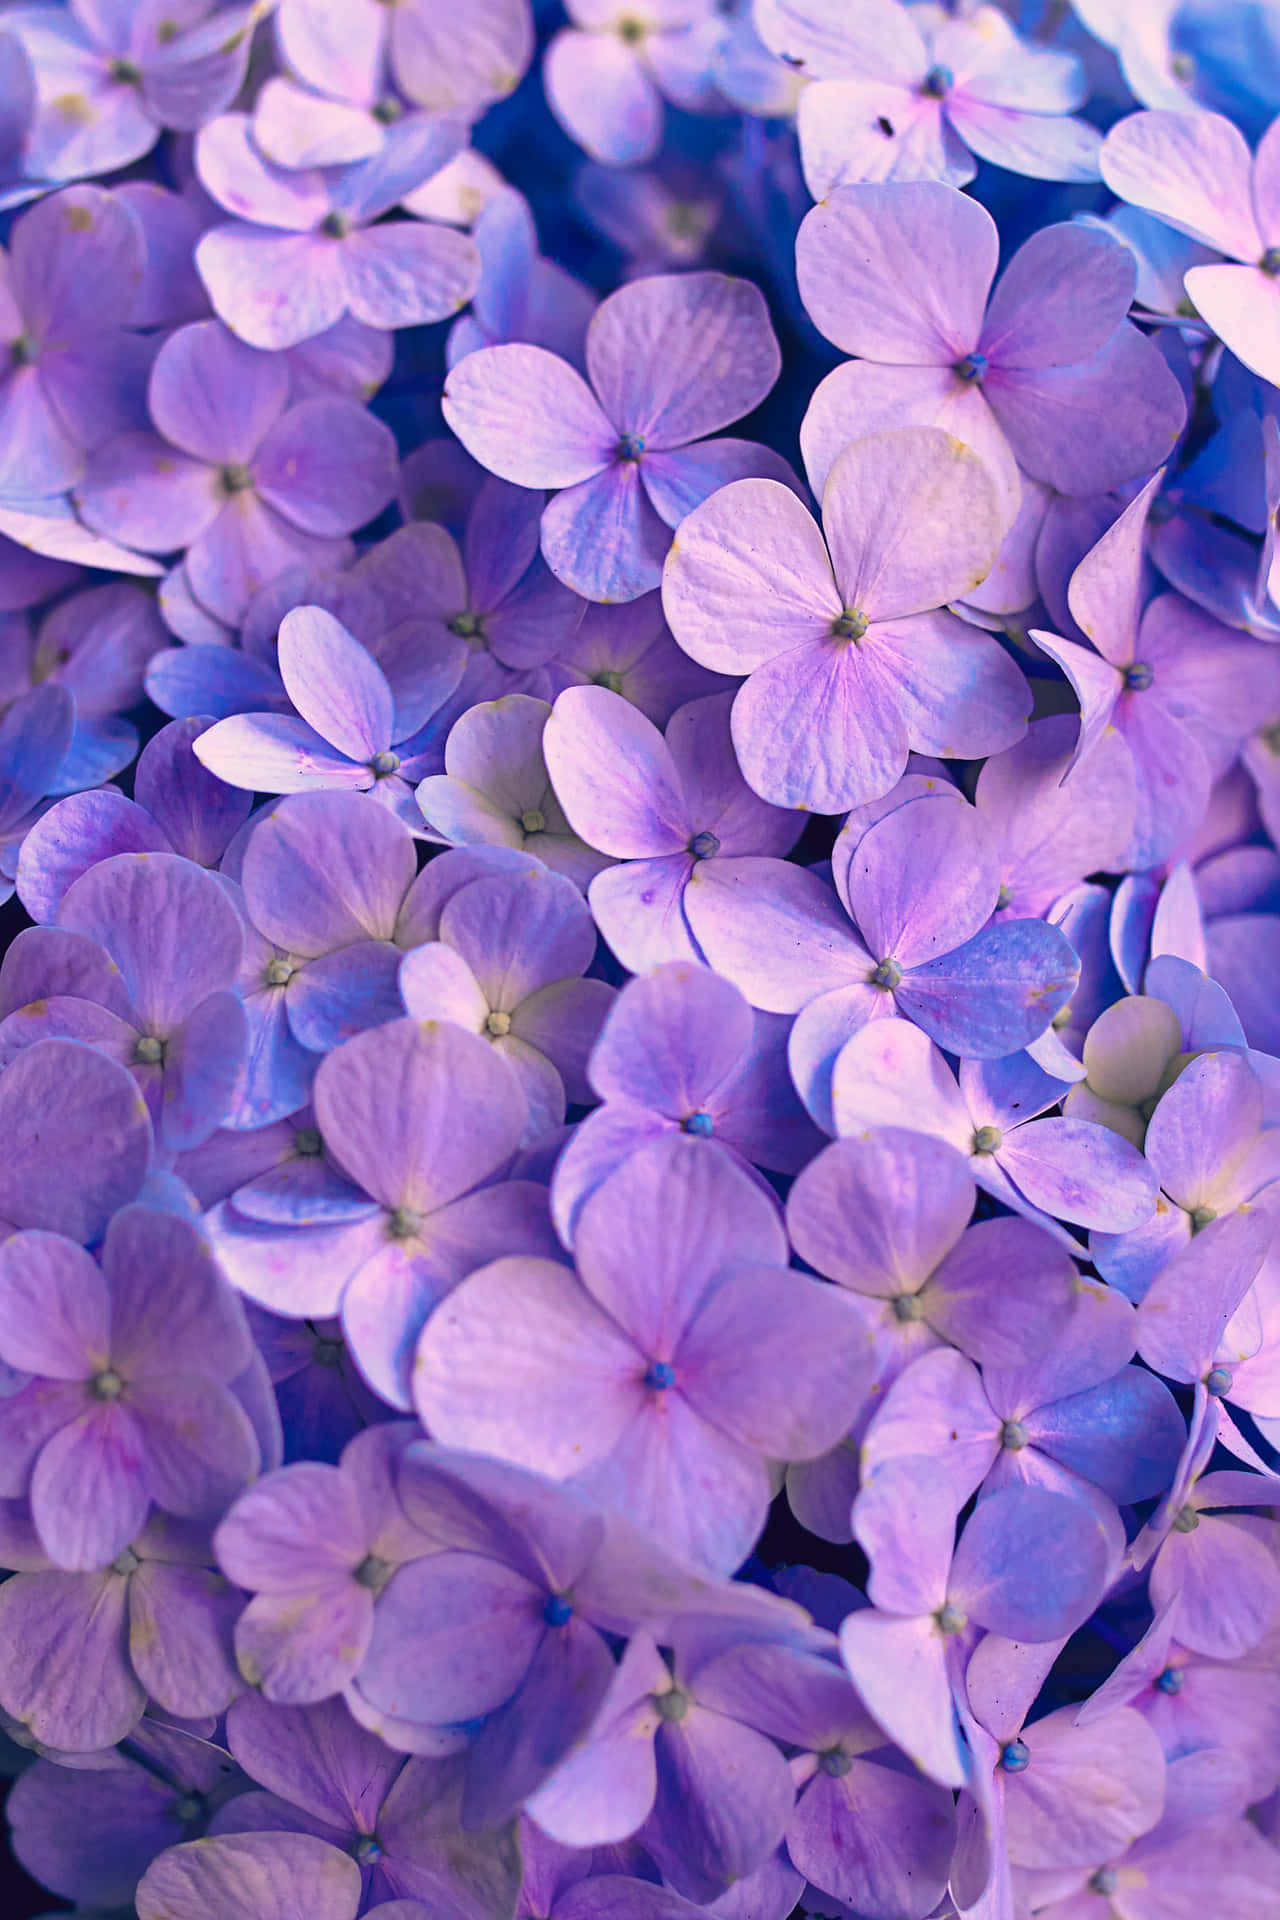 Vibrant Purple Flower Bloom on Beautifully Blurred Background